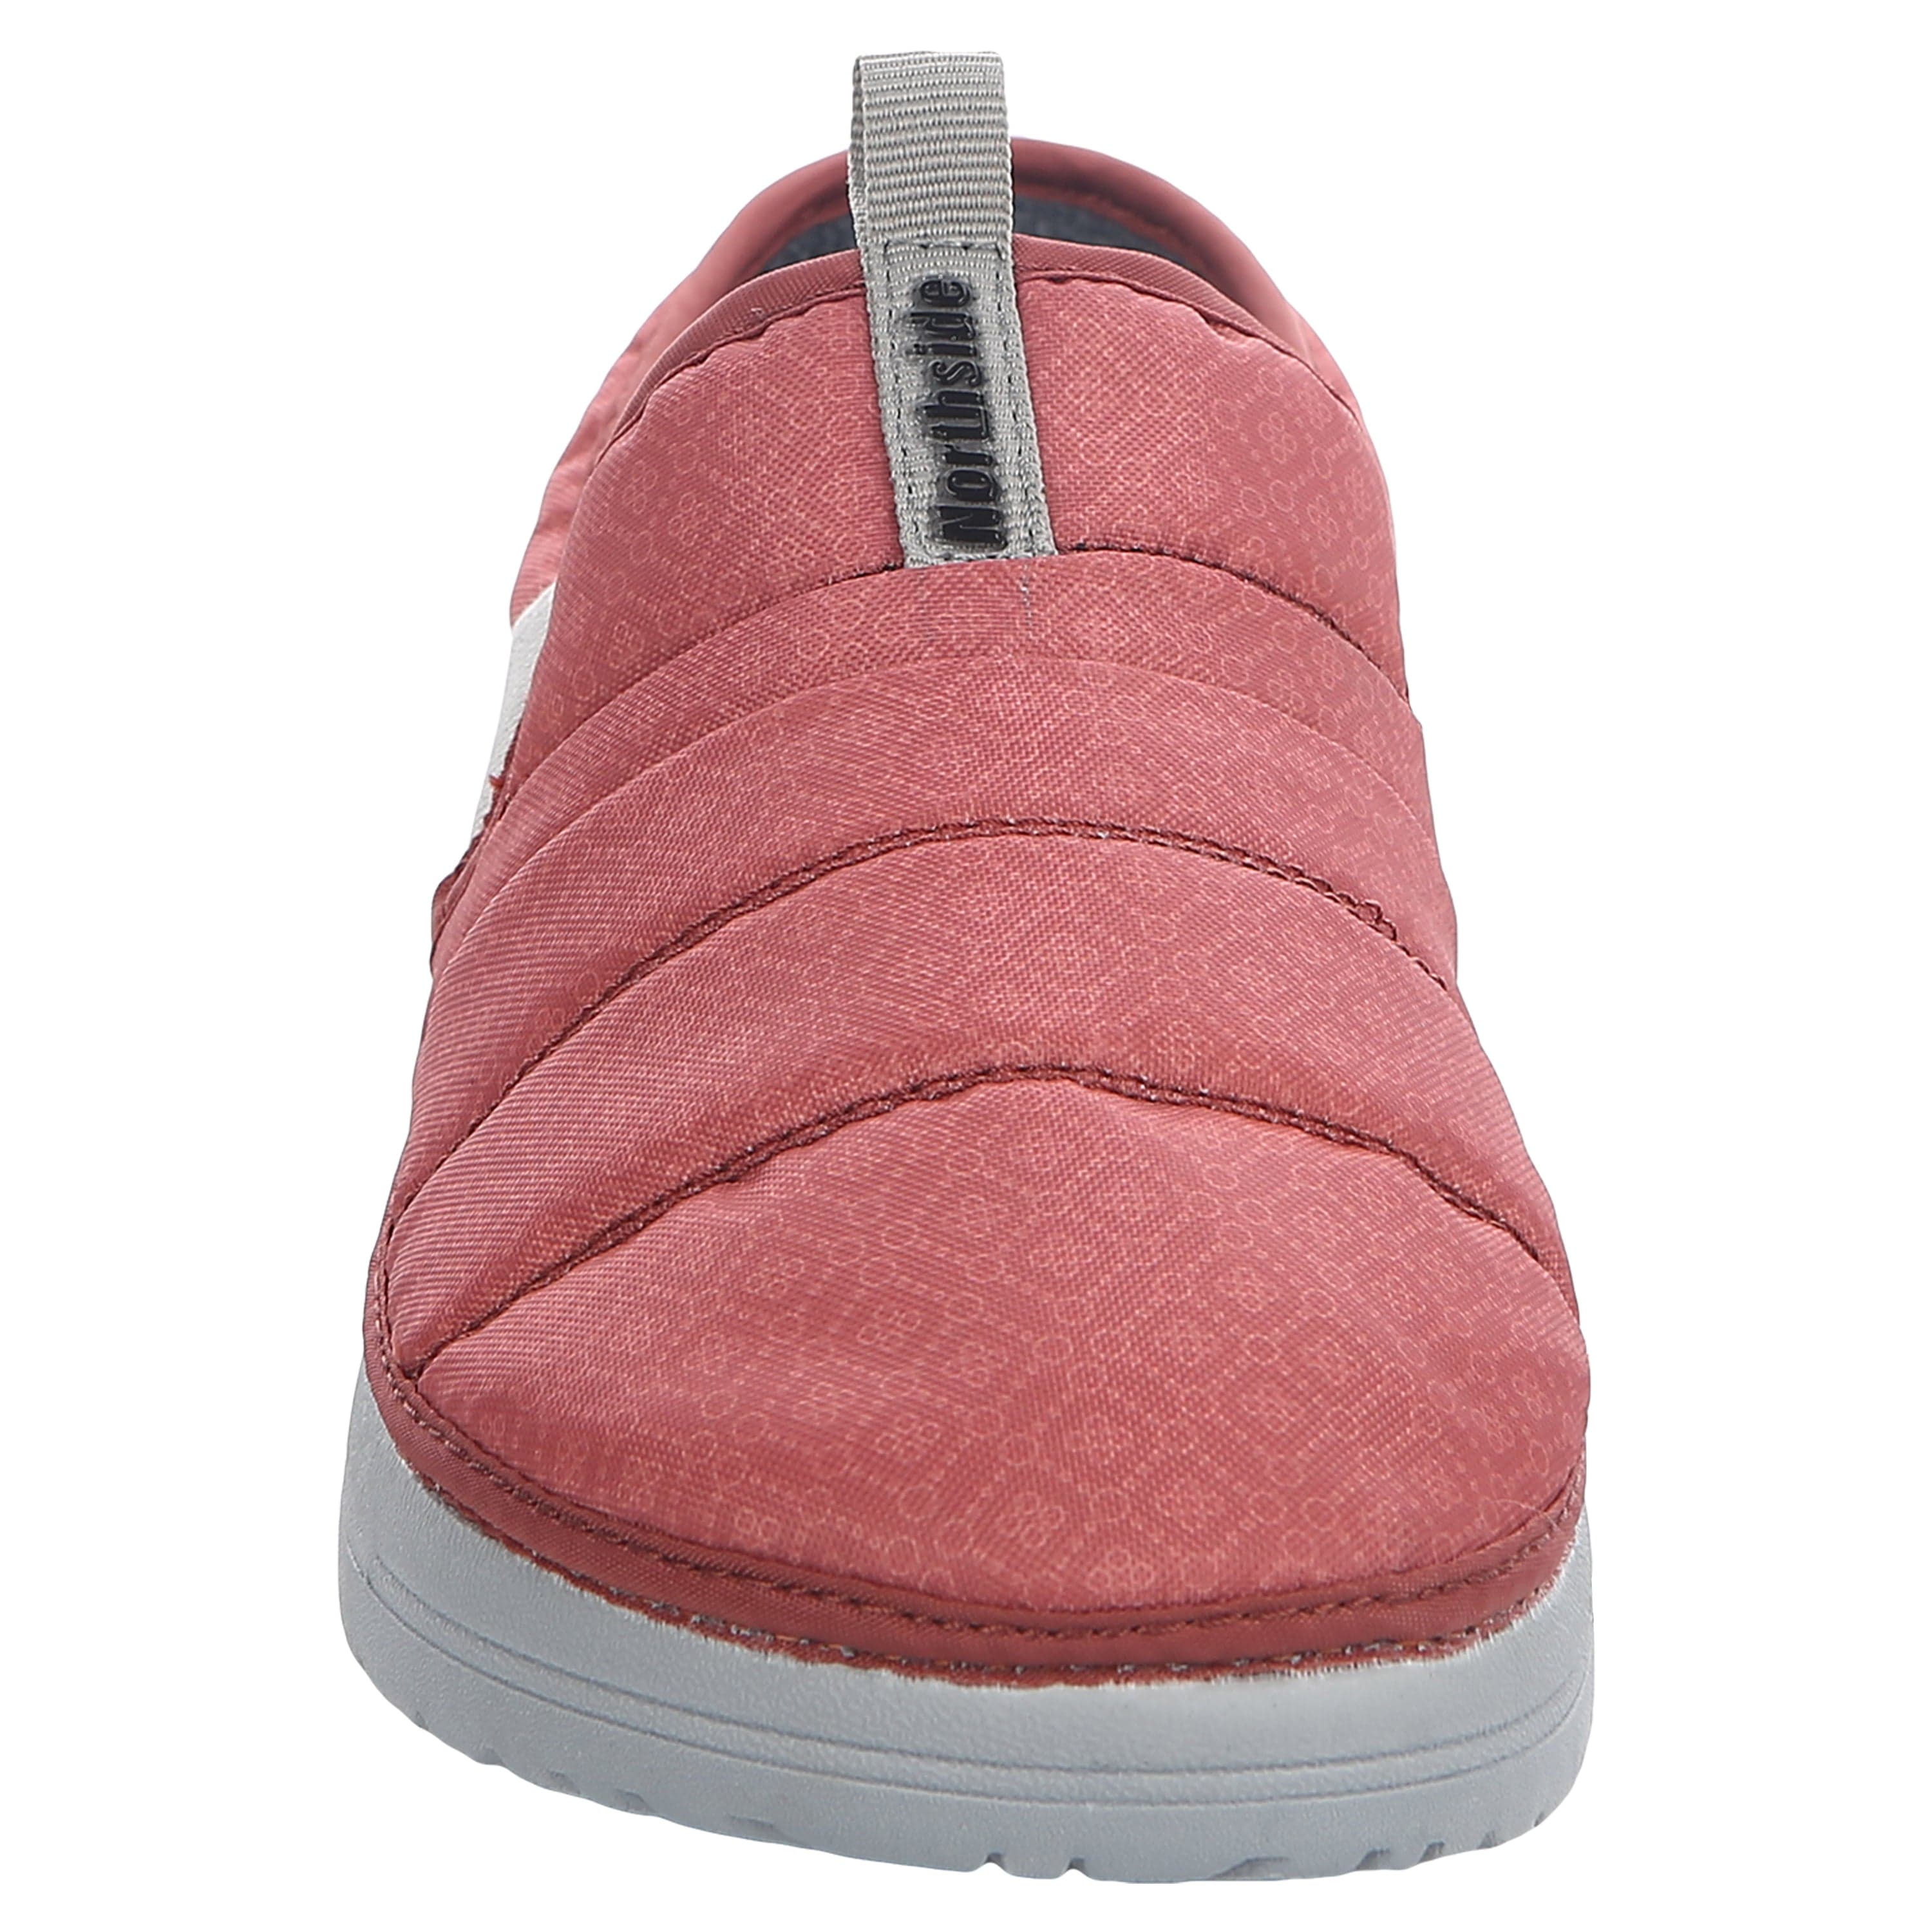 nylon slippers outdoors